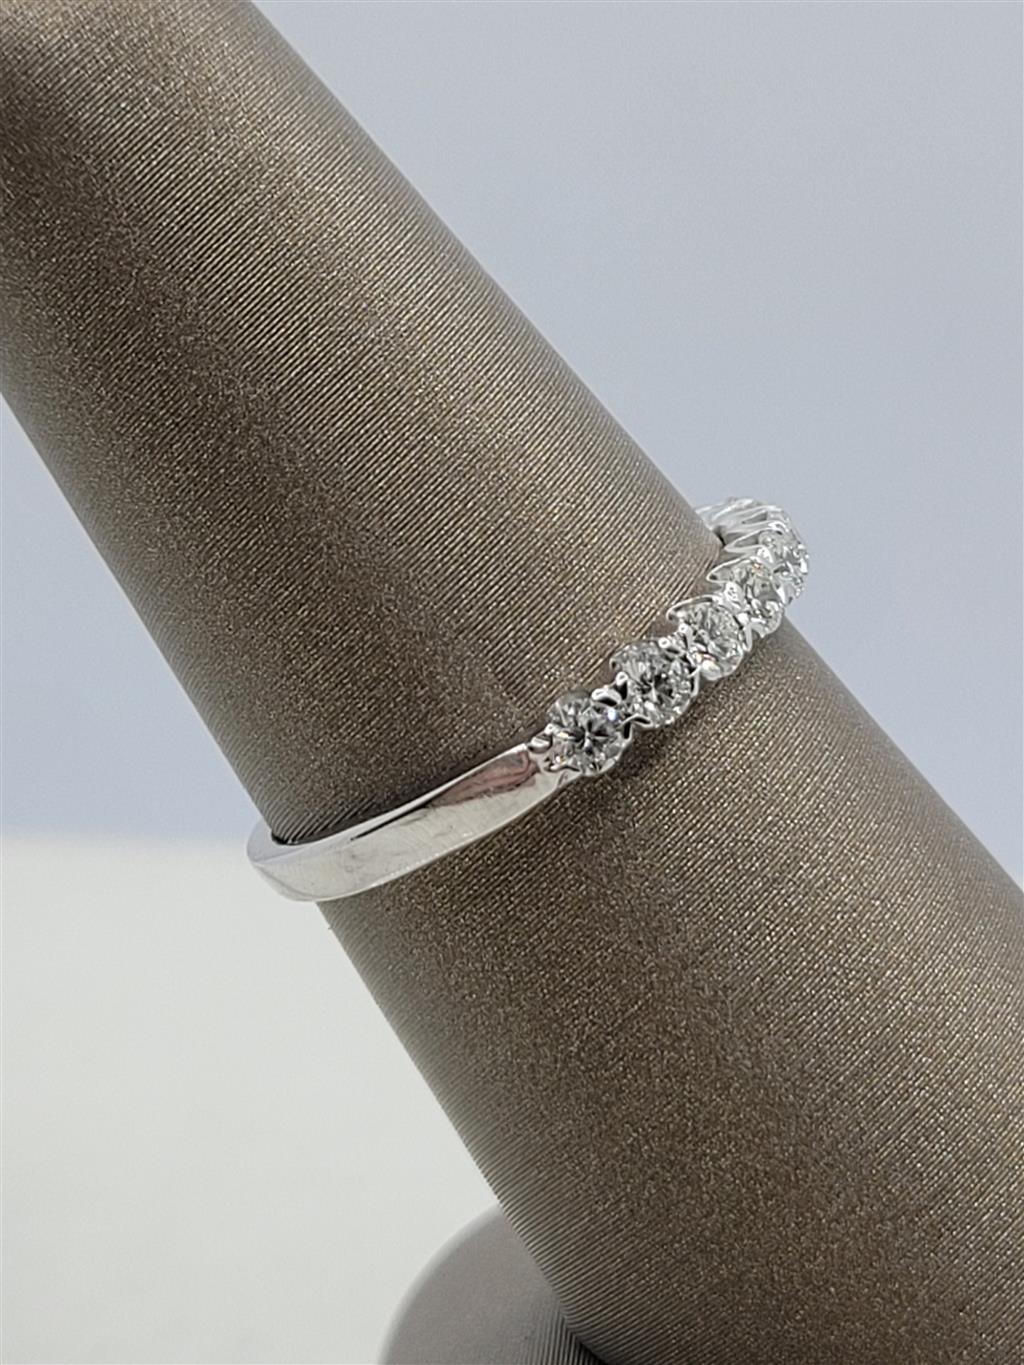 18K White Gold .48ctw Prong Set Christopher Designs Diamond Wedding Ring